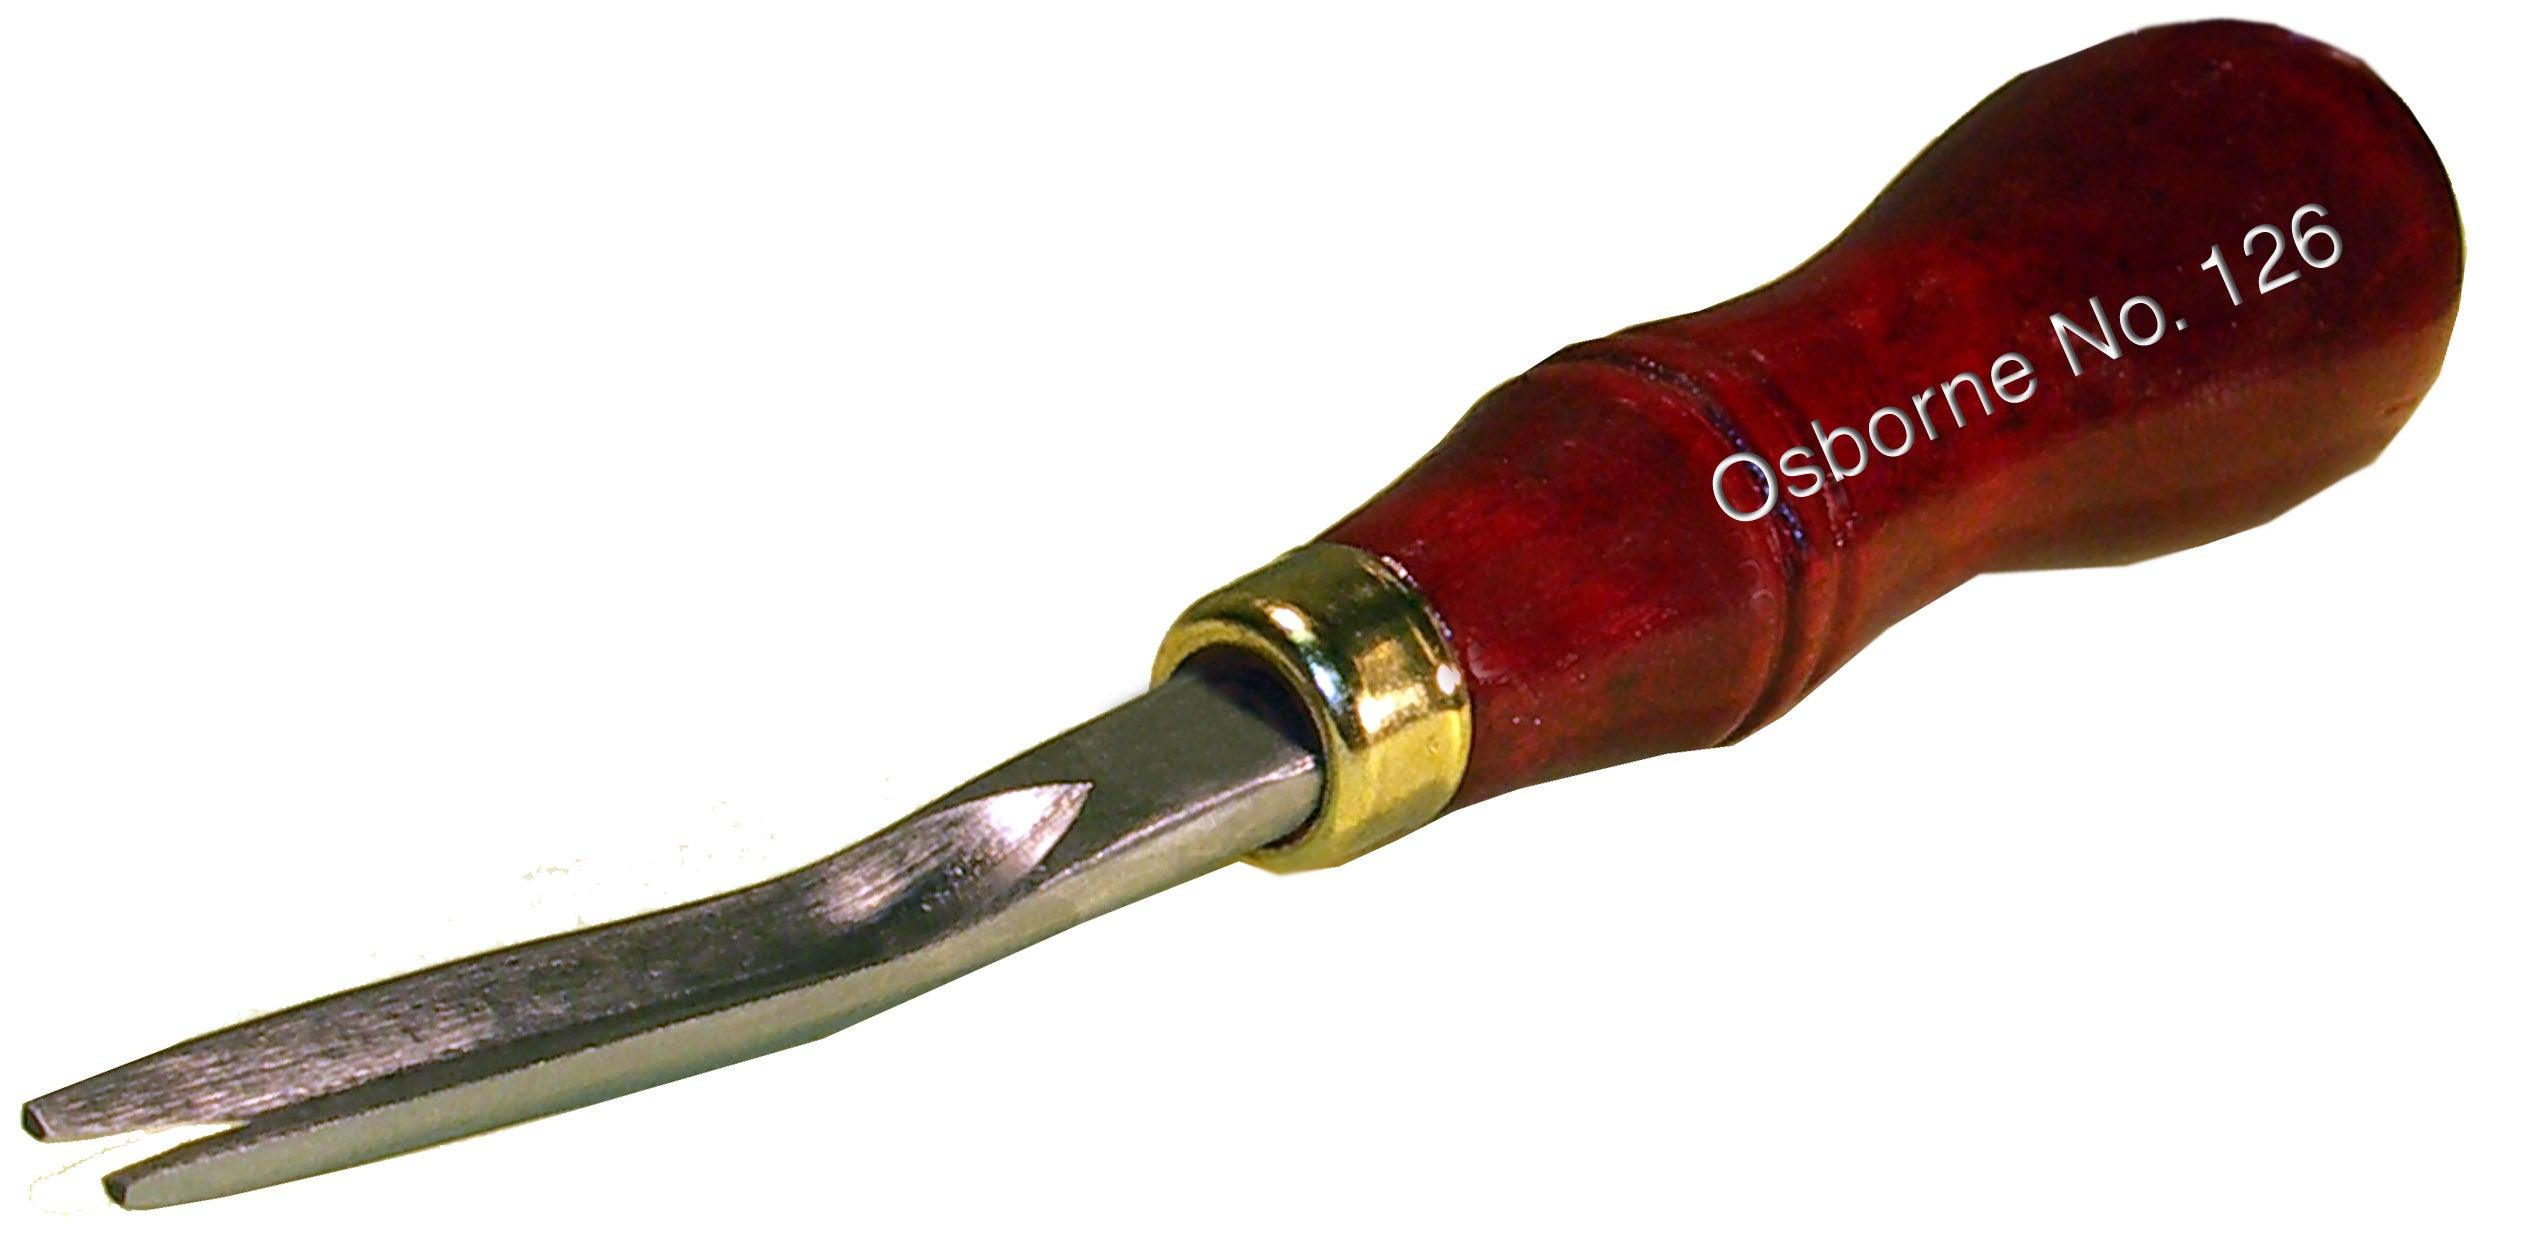 C.S. Osborne Finest Edge Tool - Drop Forged - 7/32" - Alan Richard Textiles, LTD C.S. Osborne, C.S. Osborne Edge Tools